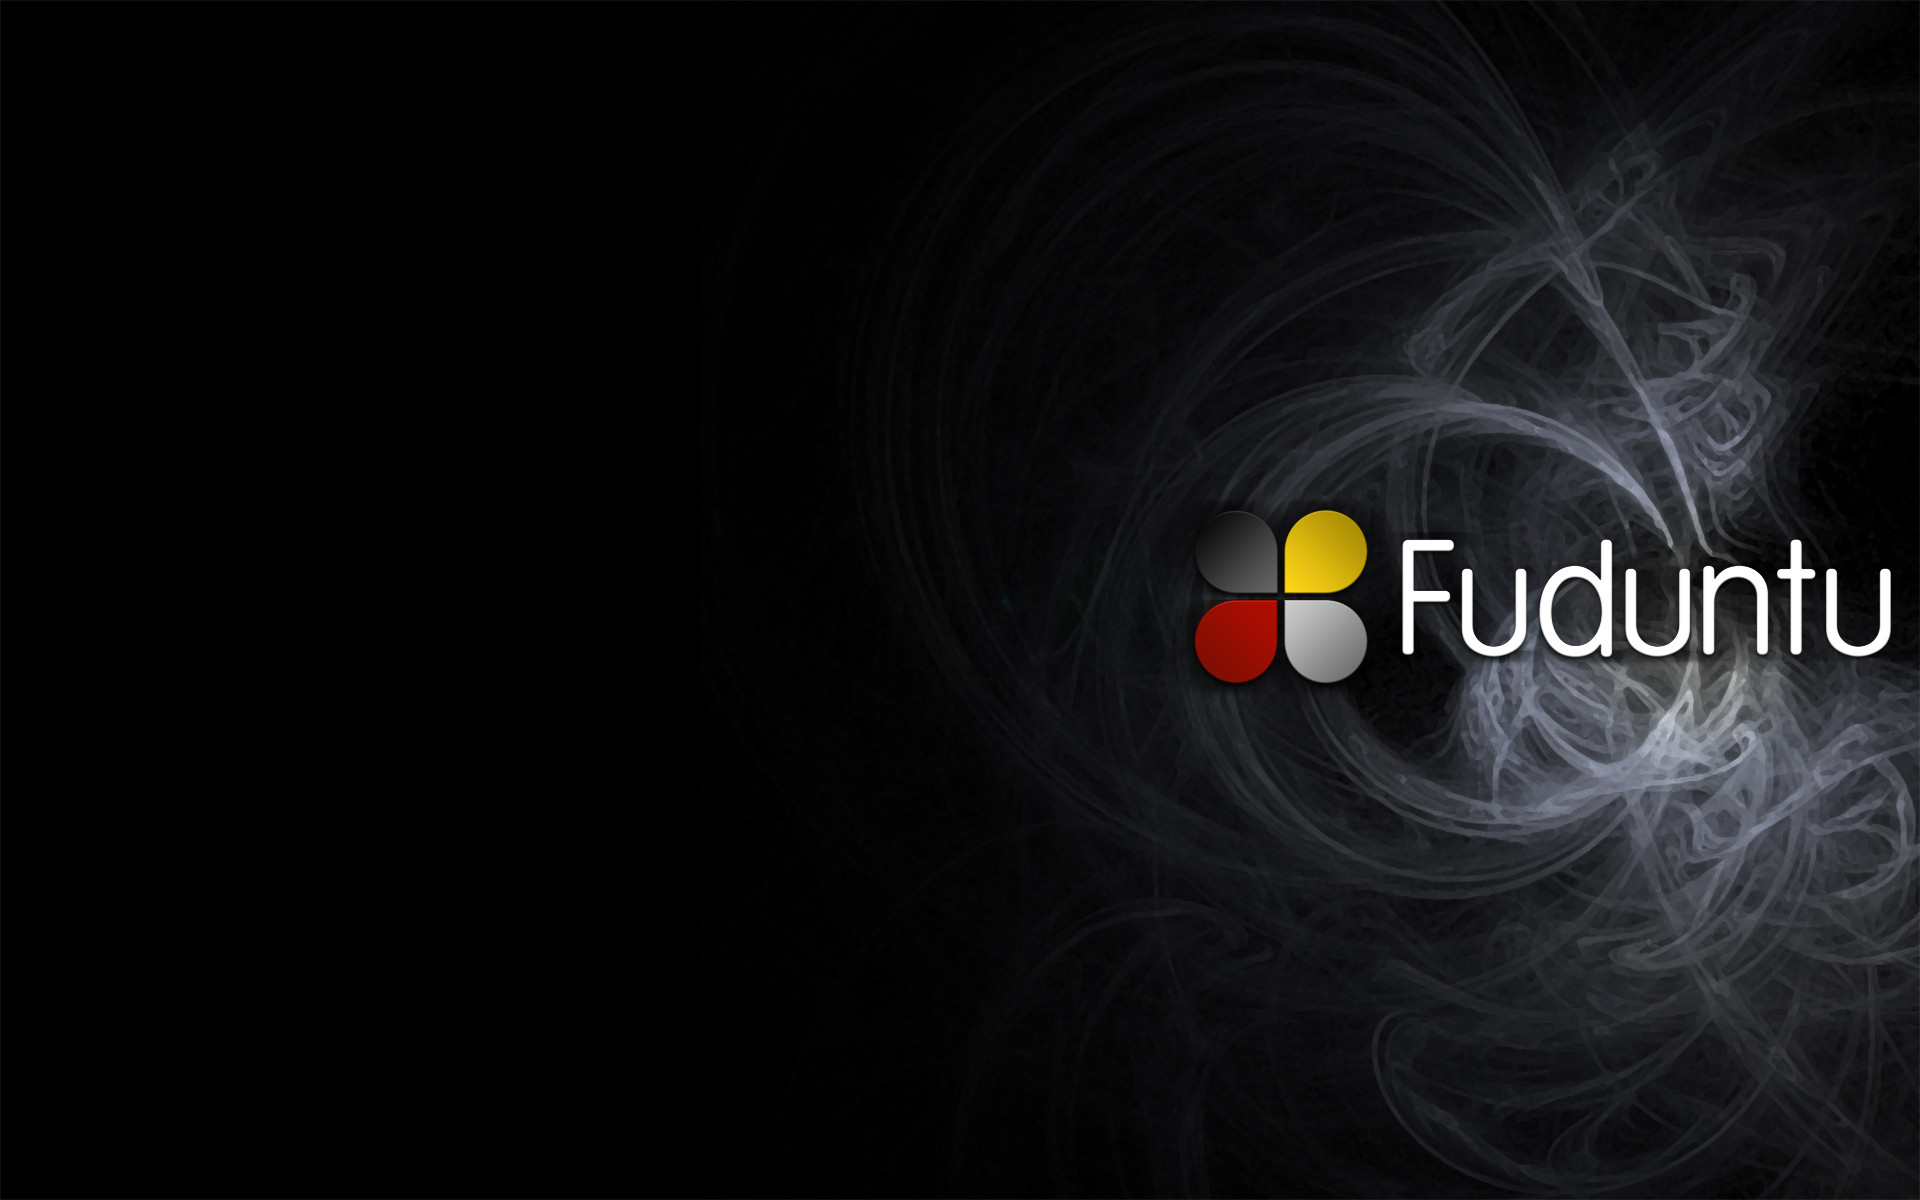 Fuduntu Bites the Dust, FuSE Linux May Take Its Place